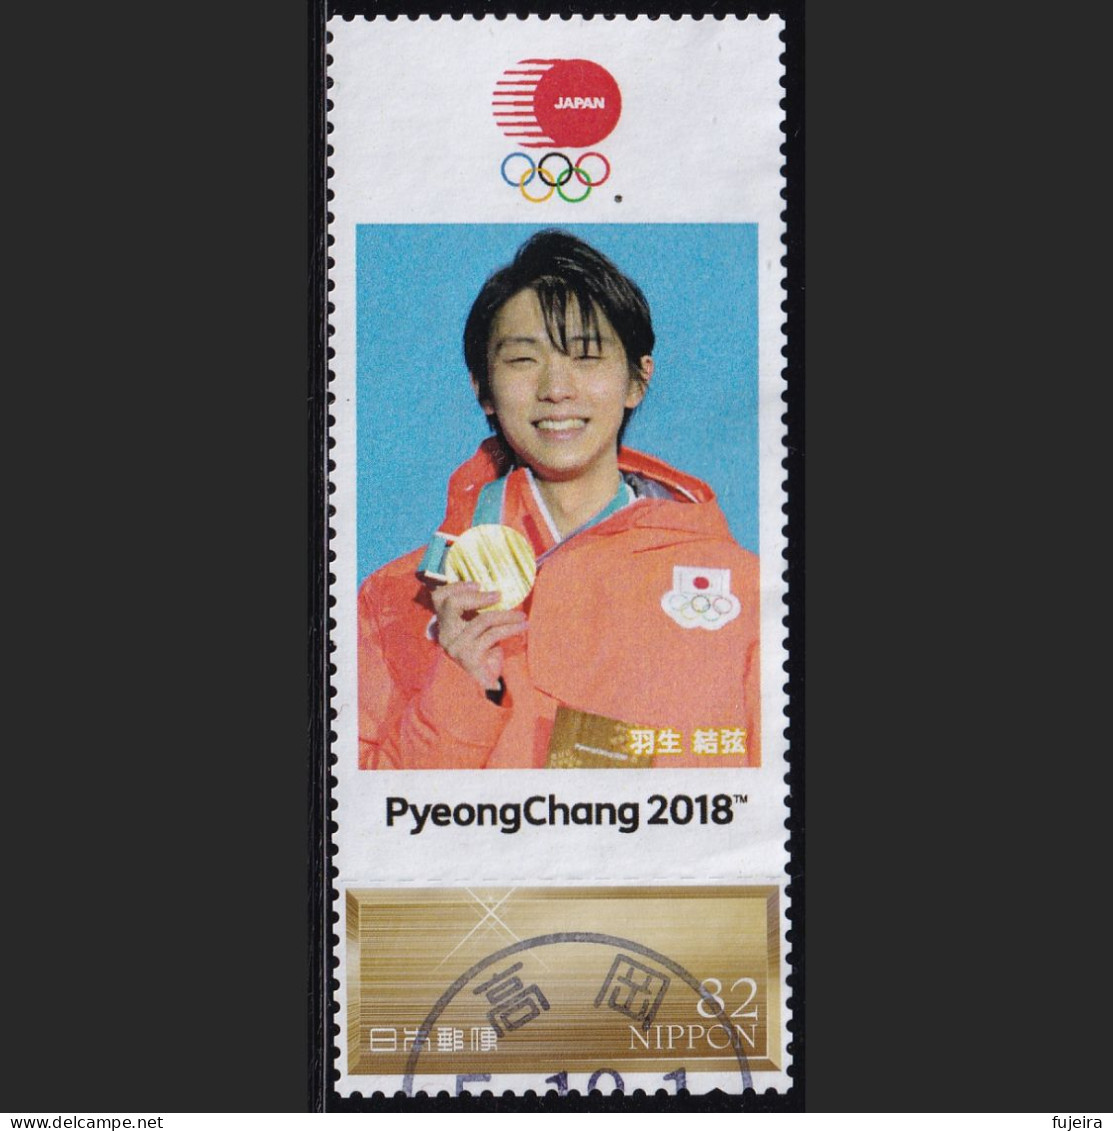 Japan Personalized Stamp, Olympic Games PyeongChang 2018 Figure Skate Hanyu Yuzuru (jpv9985) Used - Used Stamps